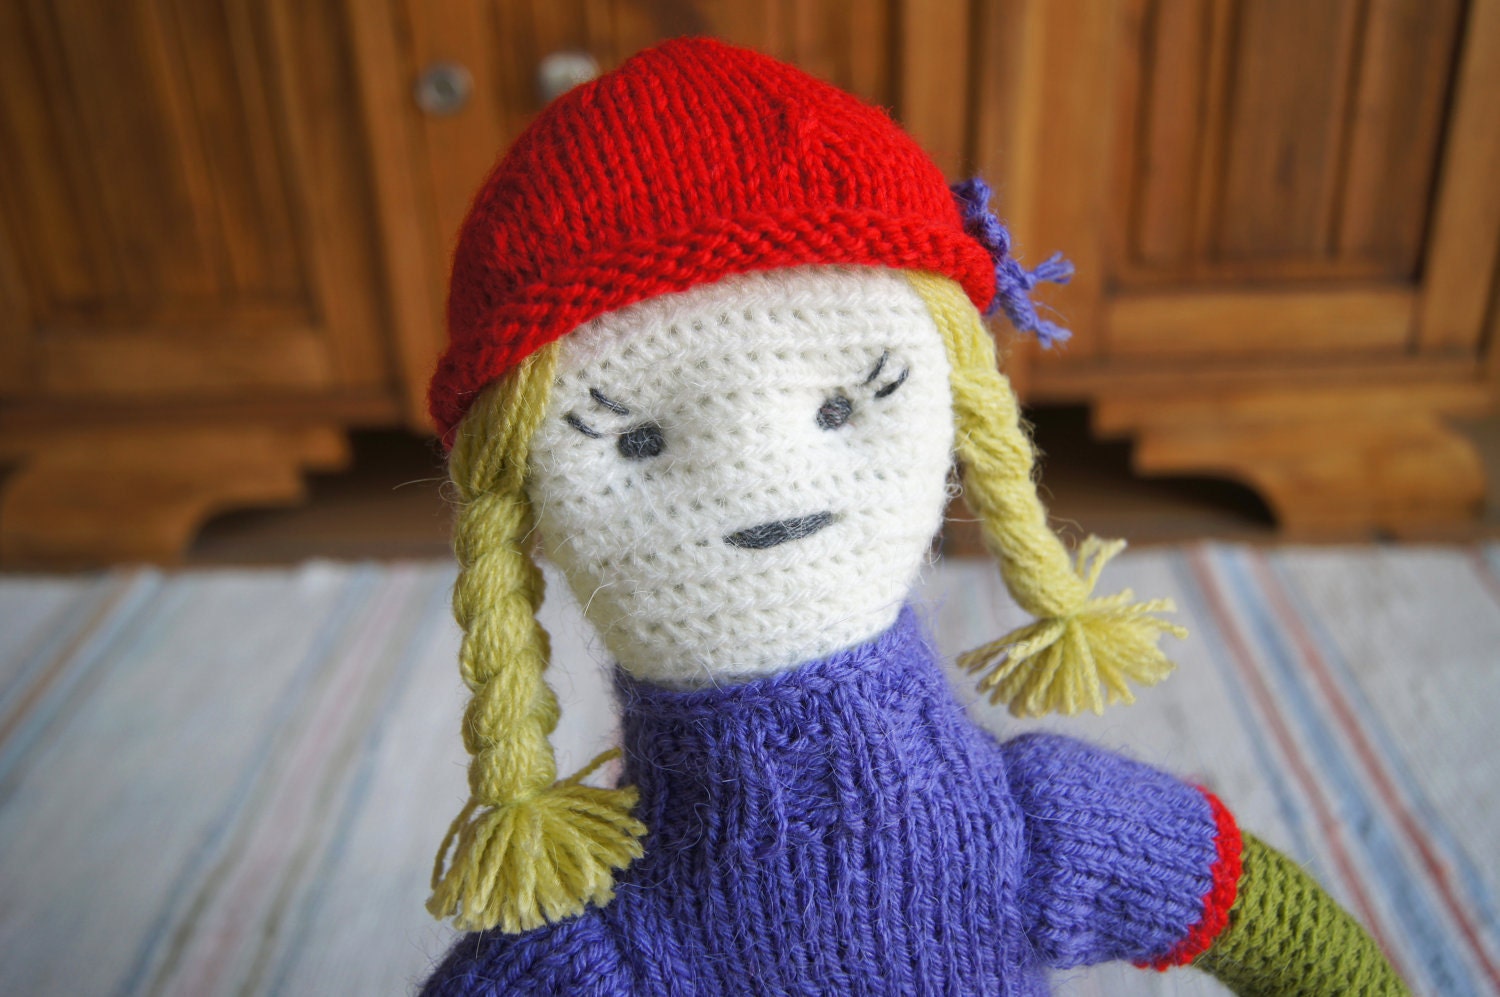 Crocheted doll